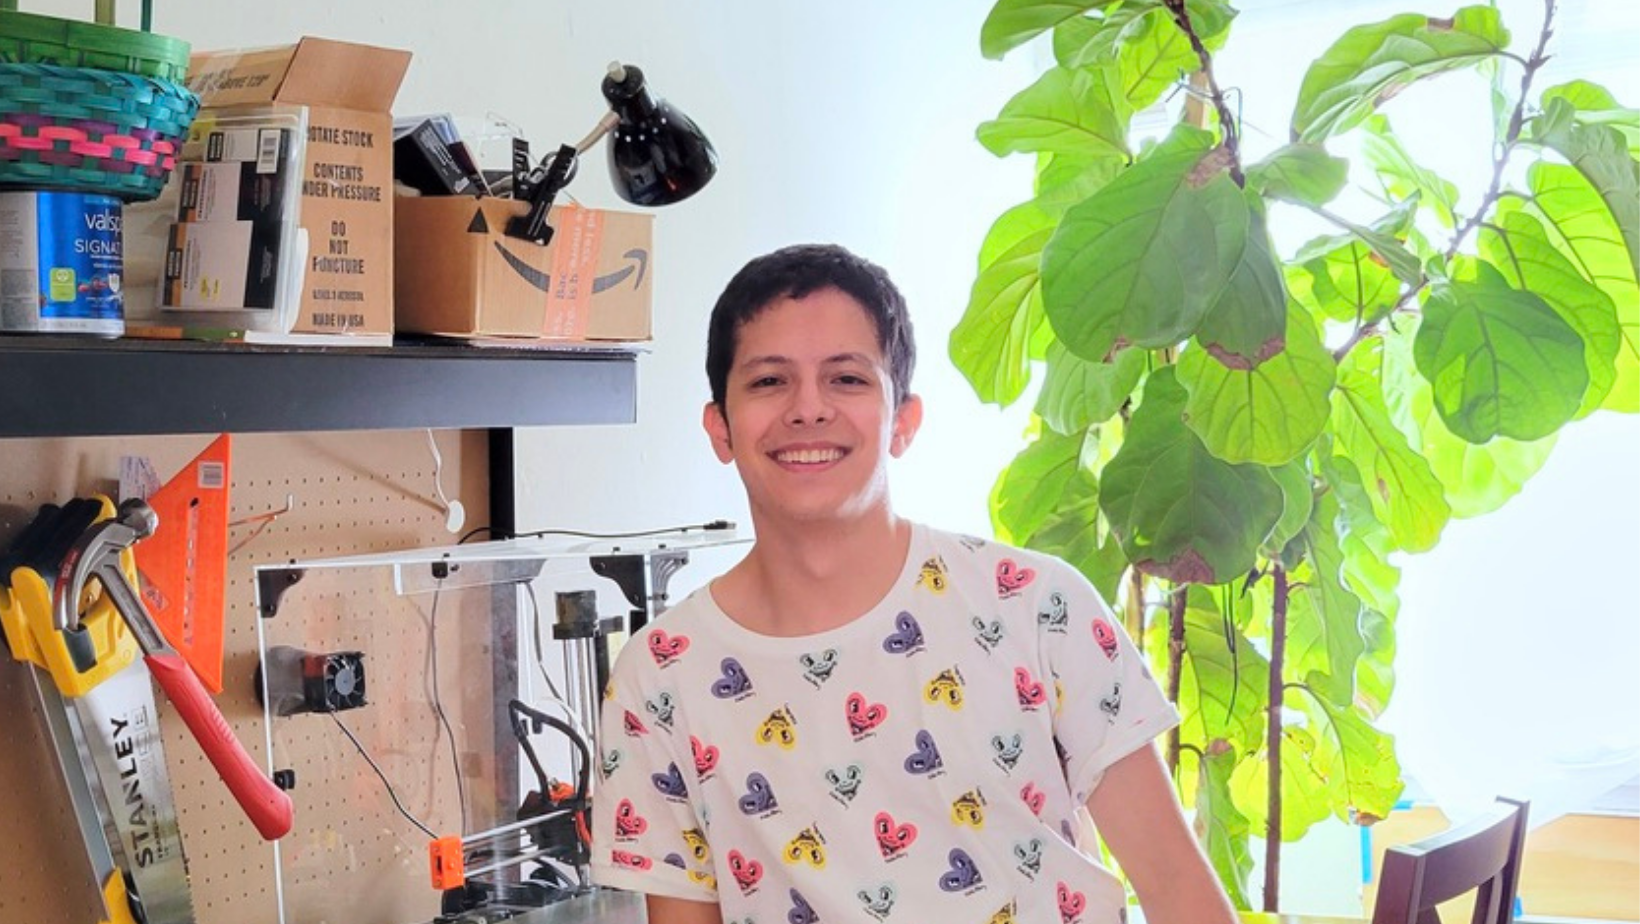 Meet Donaldo Almazan – Artist and Engineer Designing Maker Ed’s Online Community